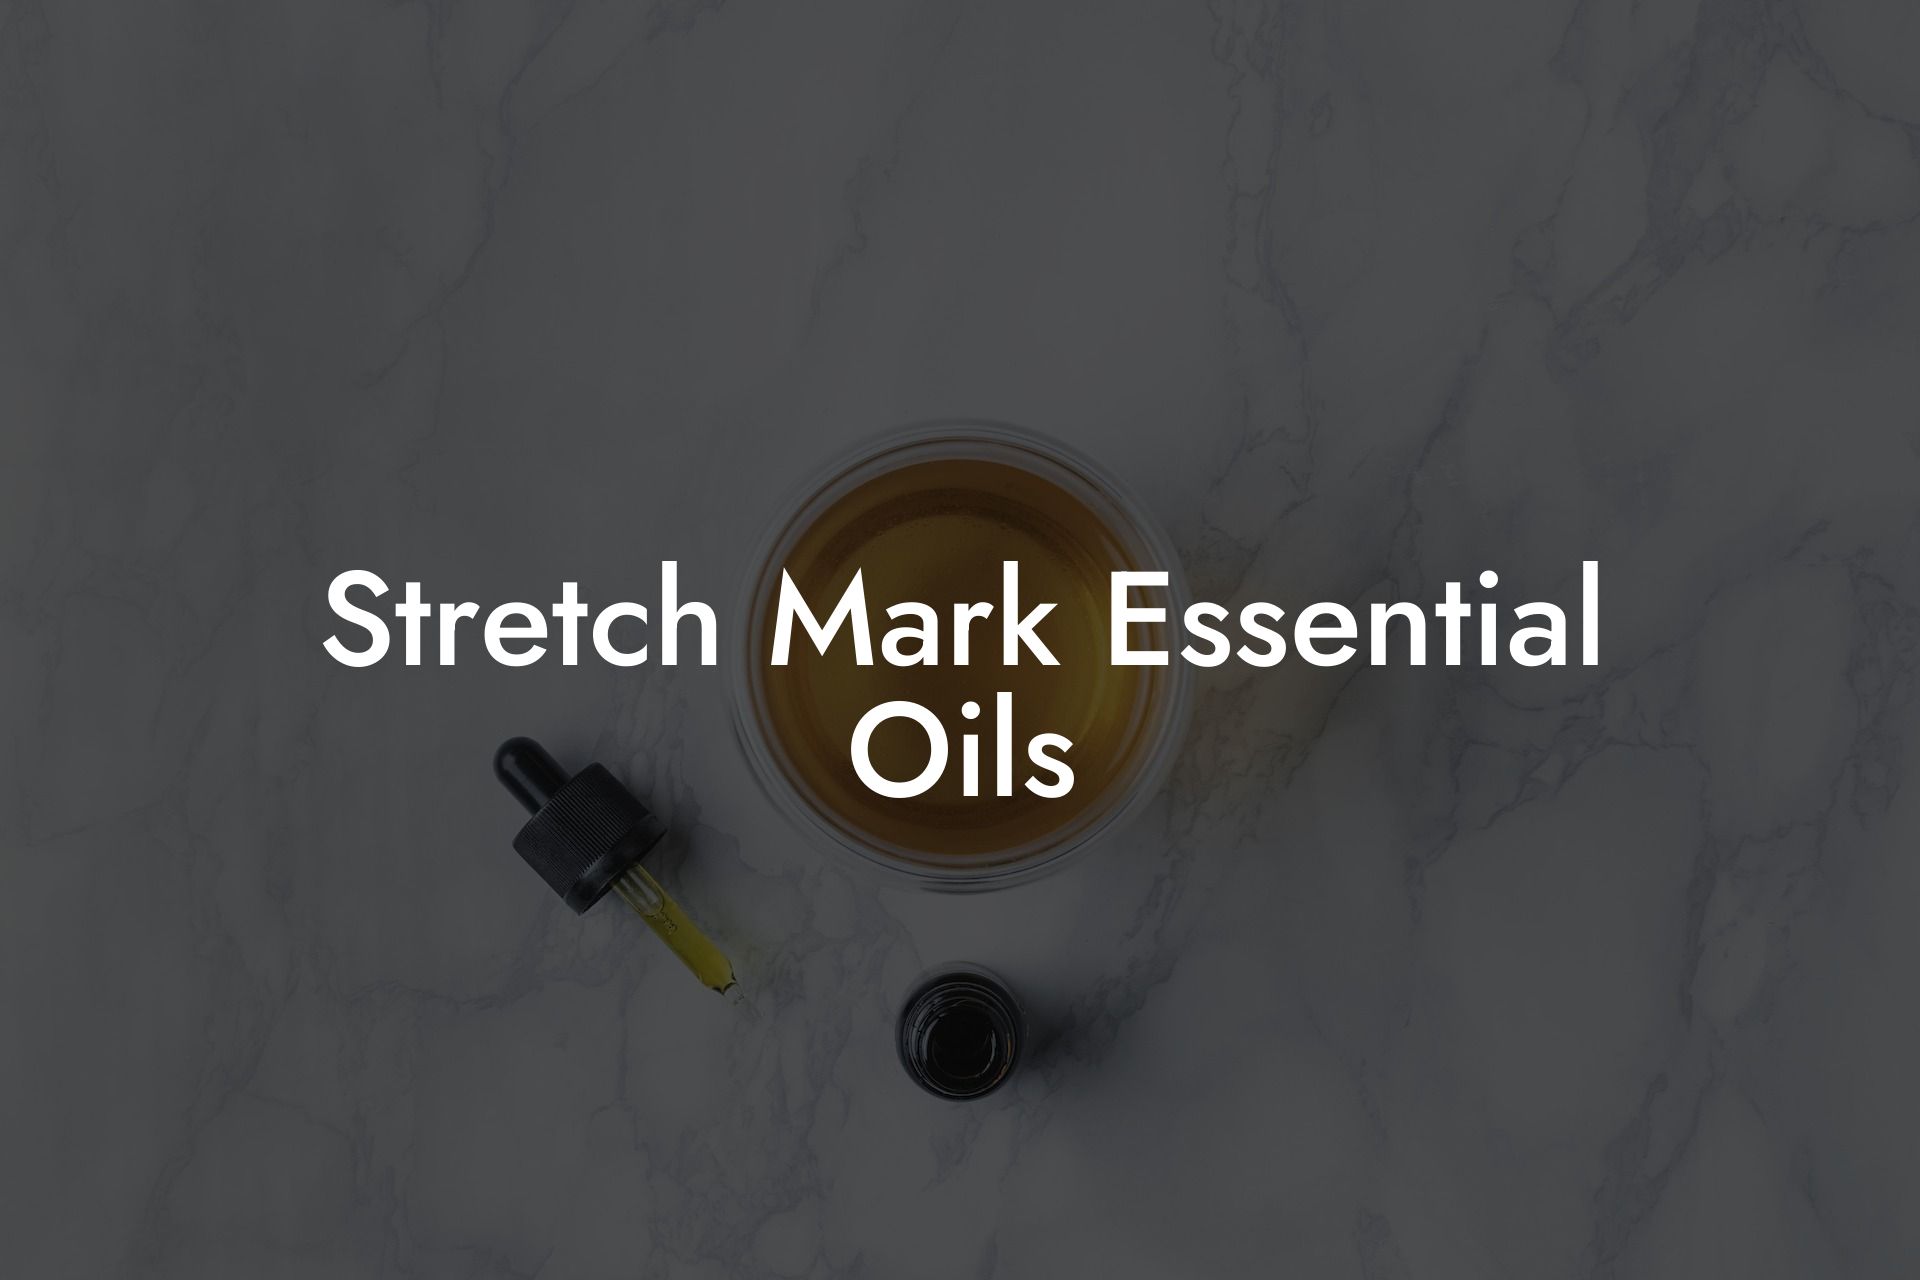 Stretch Mark Essential Oils